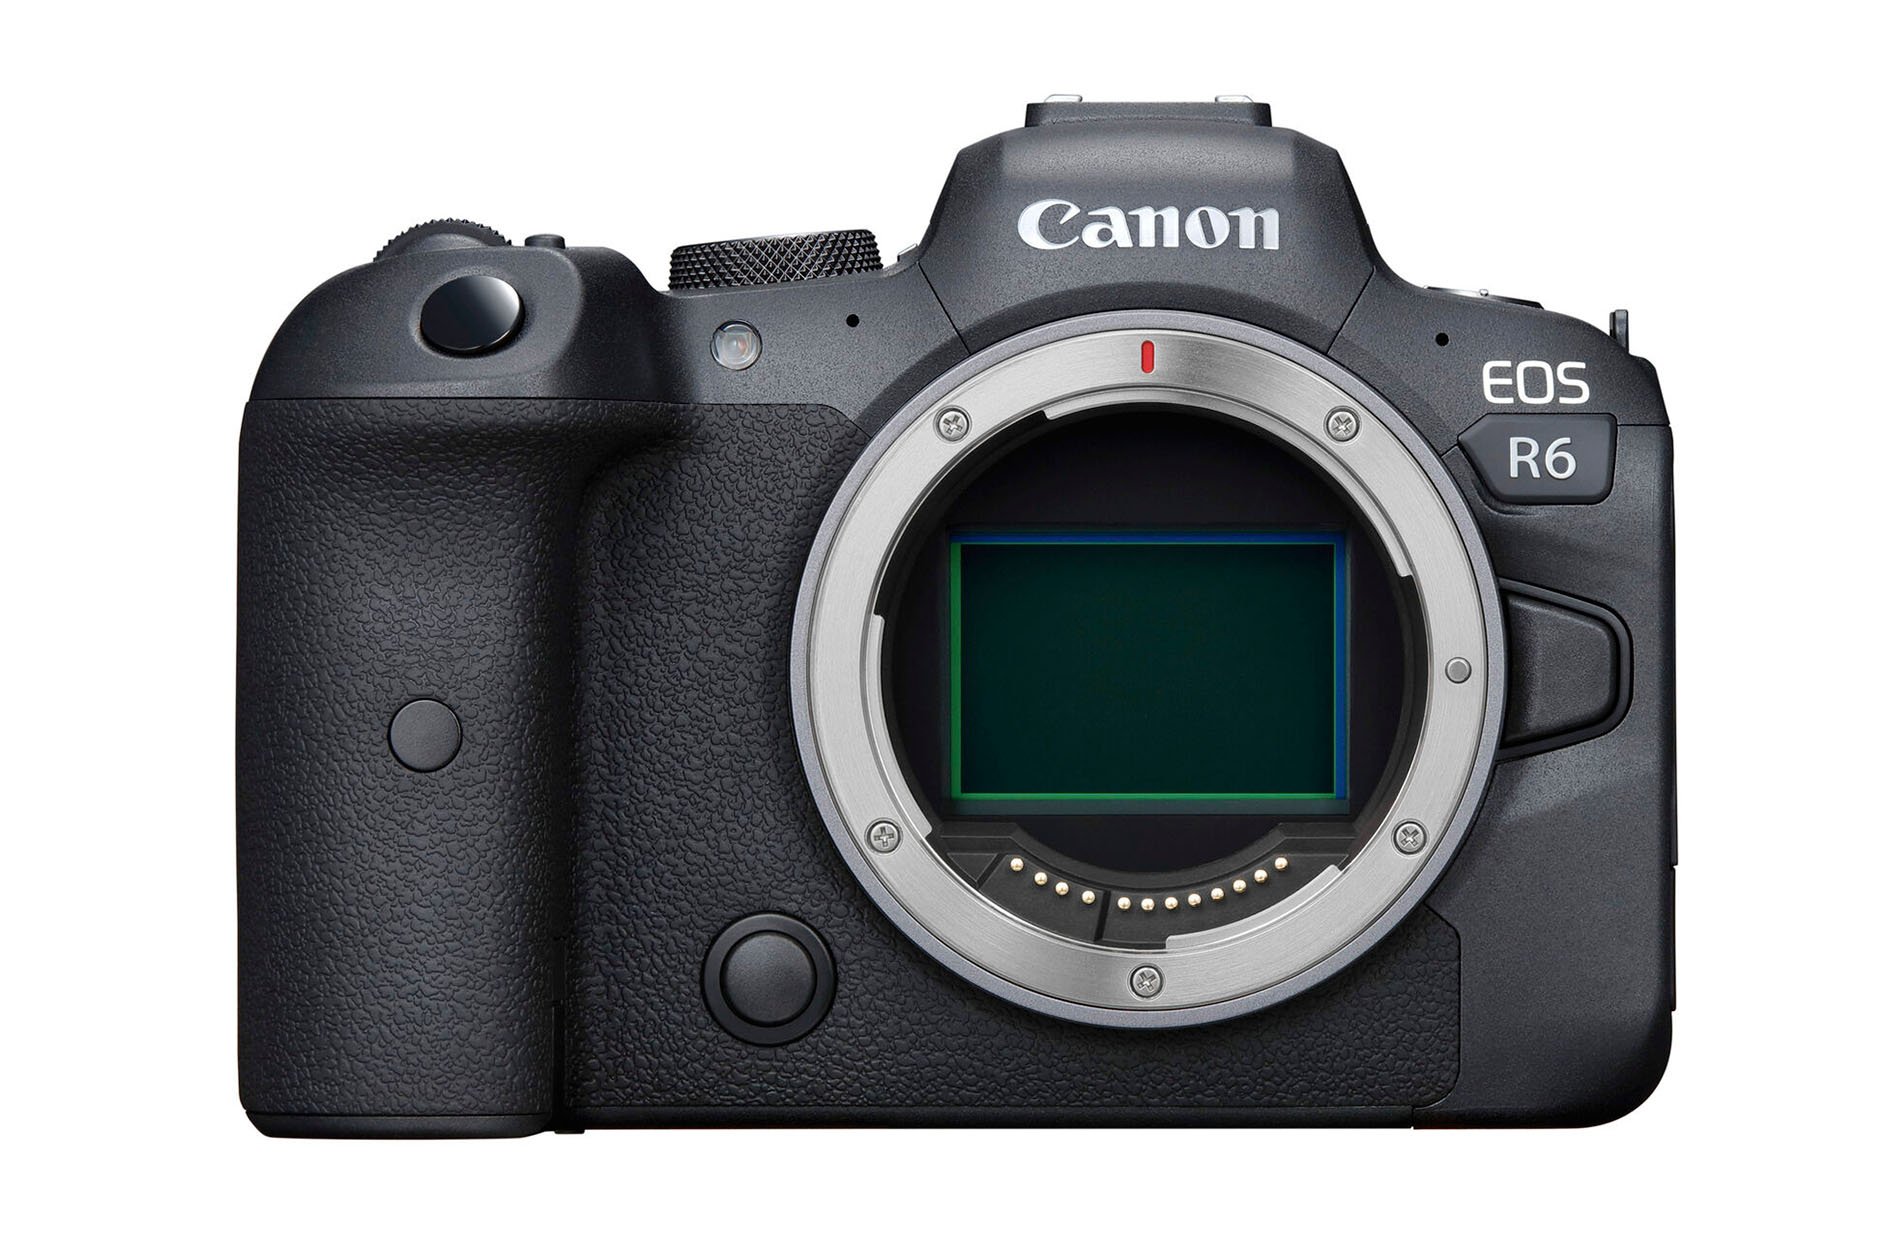 Canon EOS R6 Mark II body + RF 24-105mm F/4L IS USM - Kamera Express